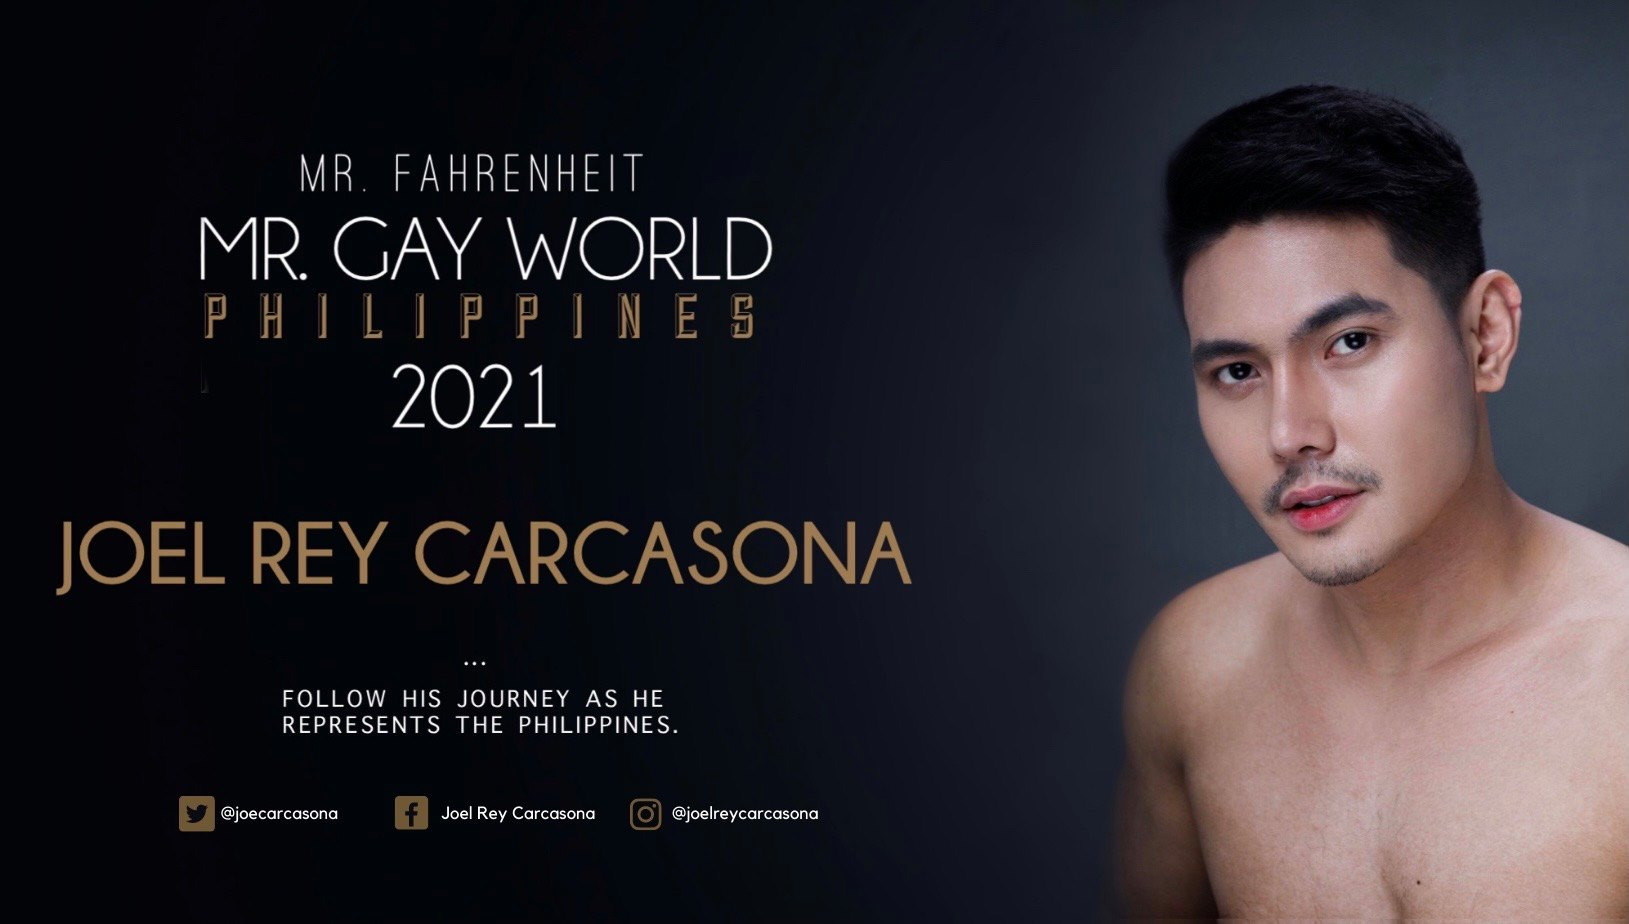 joel rey carcasona vence mr gay world philippines 2021.   - Página 2 RPCQNR